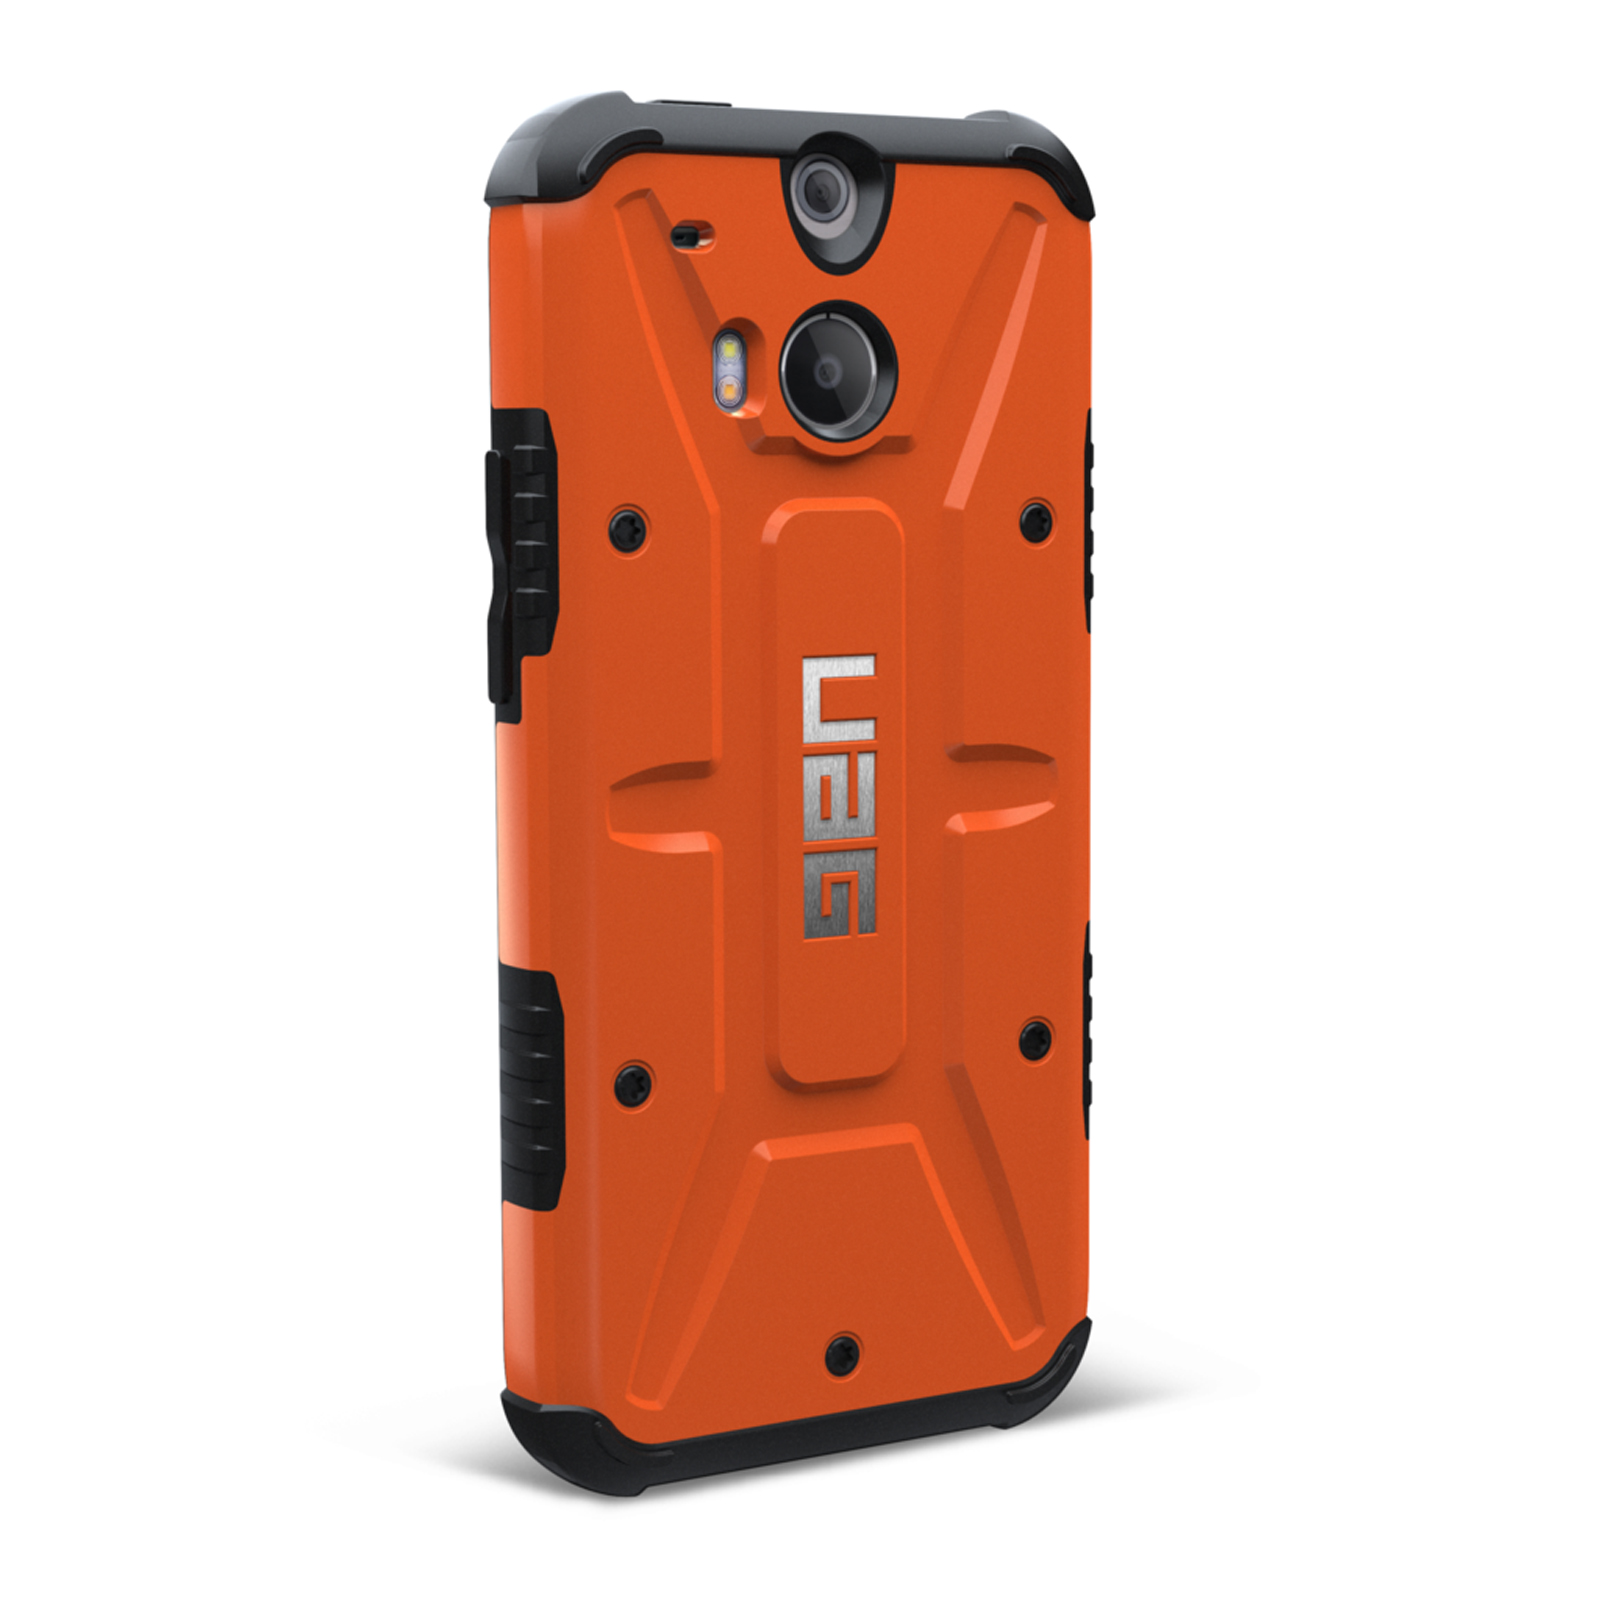 UAG HTC One M8 Composite Case - Outland - Rust/Black